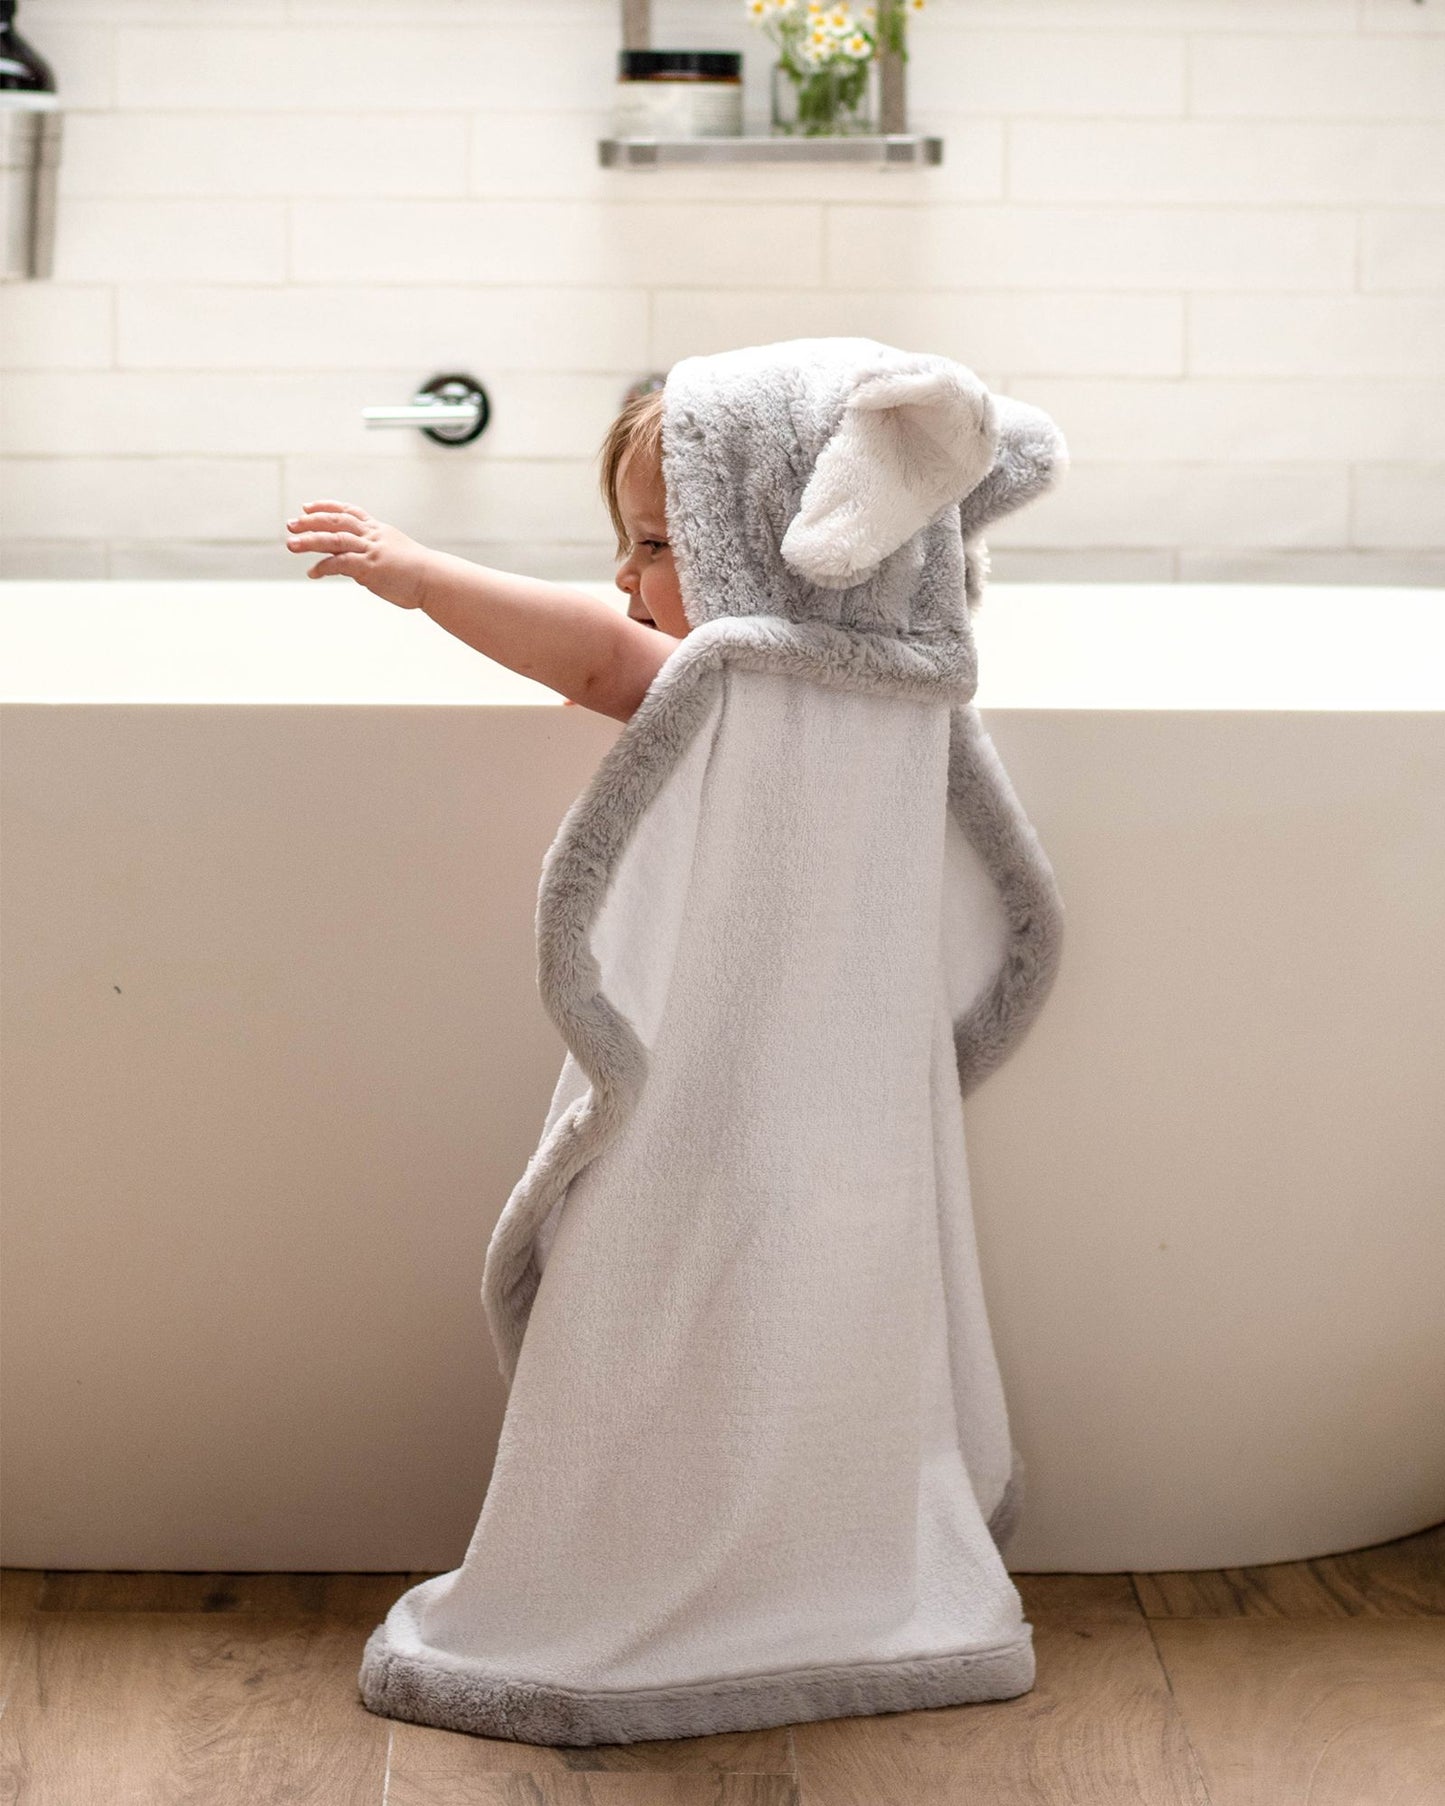 TLLC Plush Hooded Towel - Soft Grey